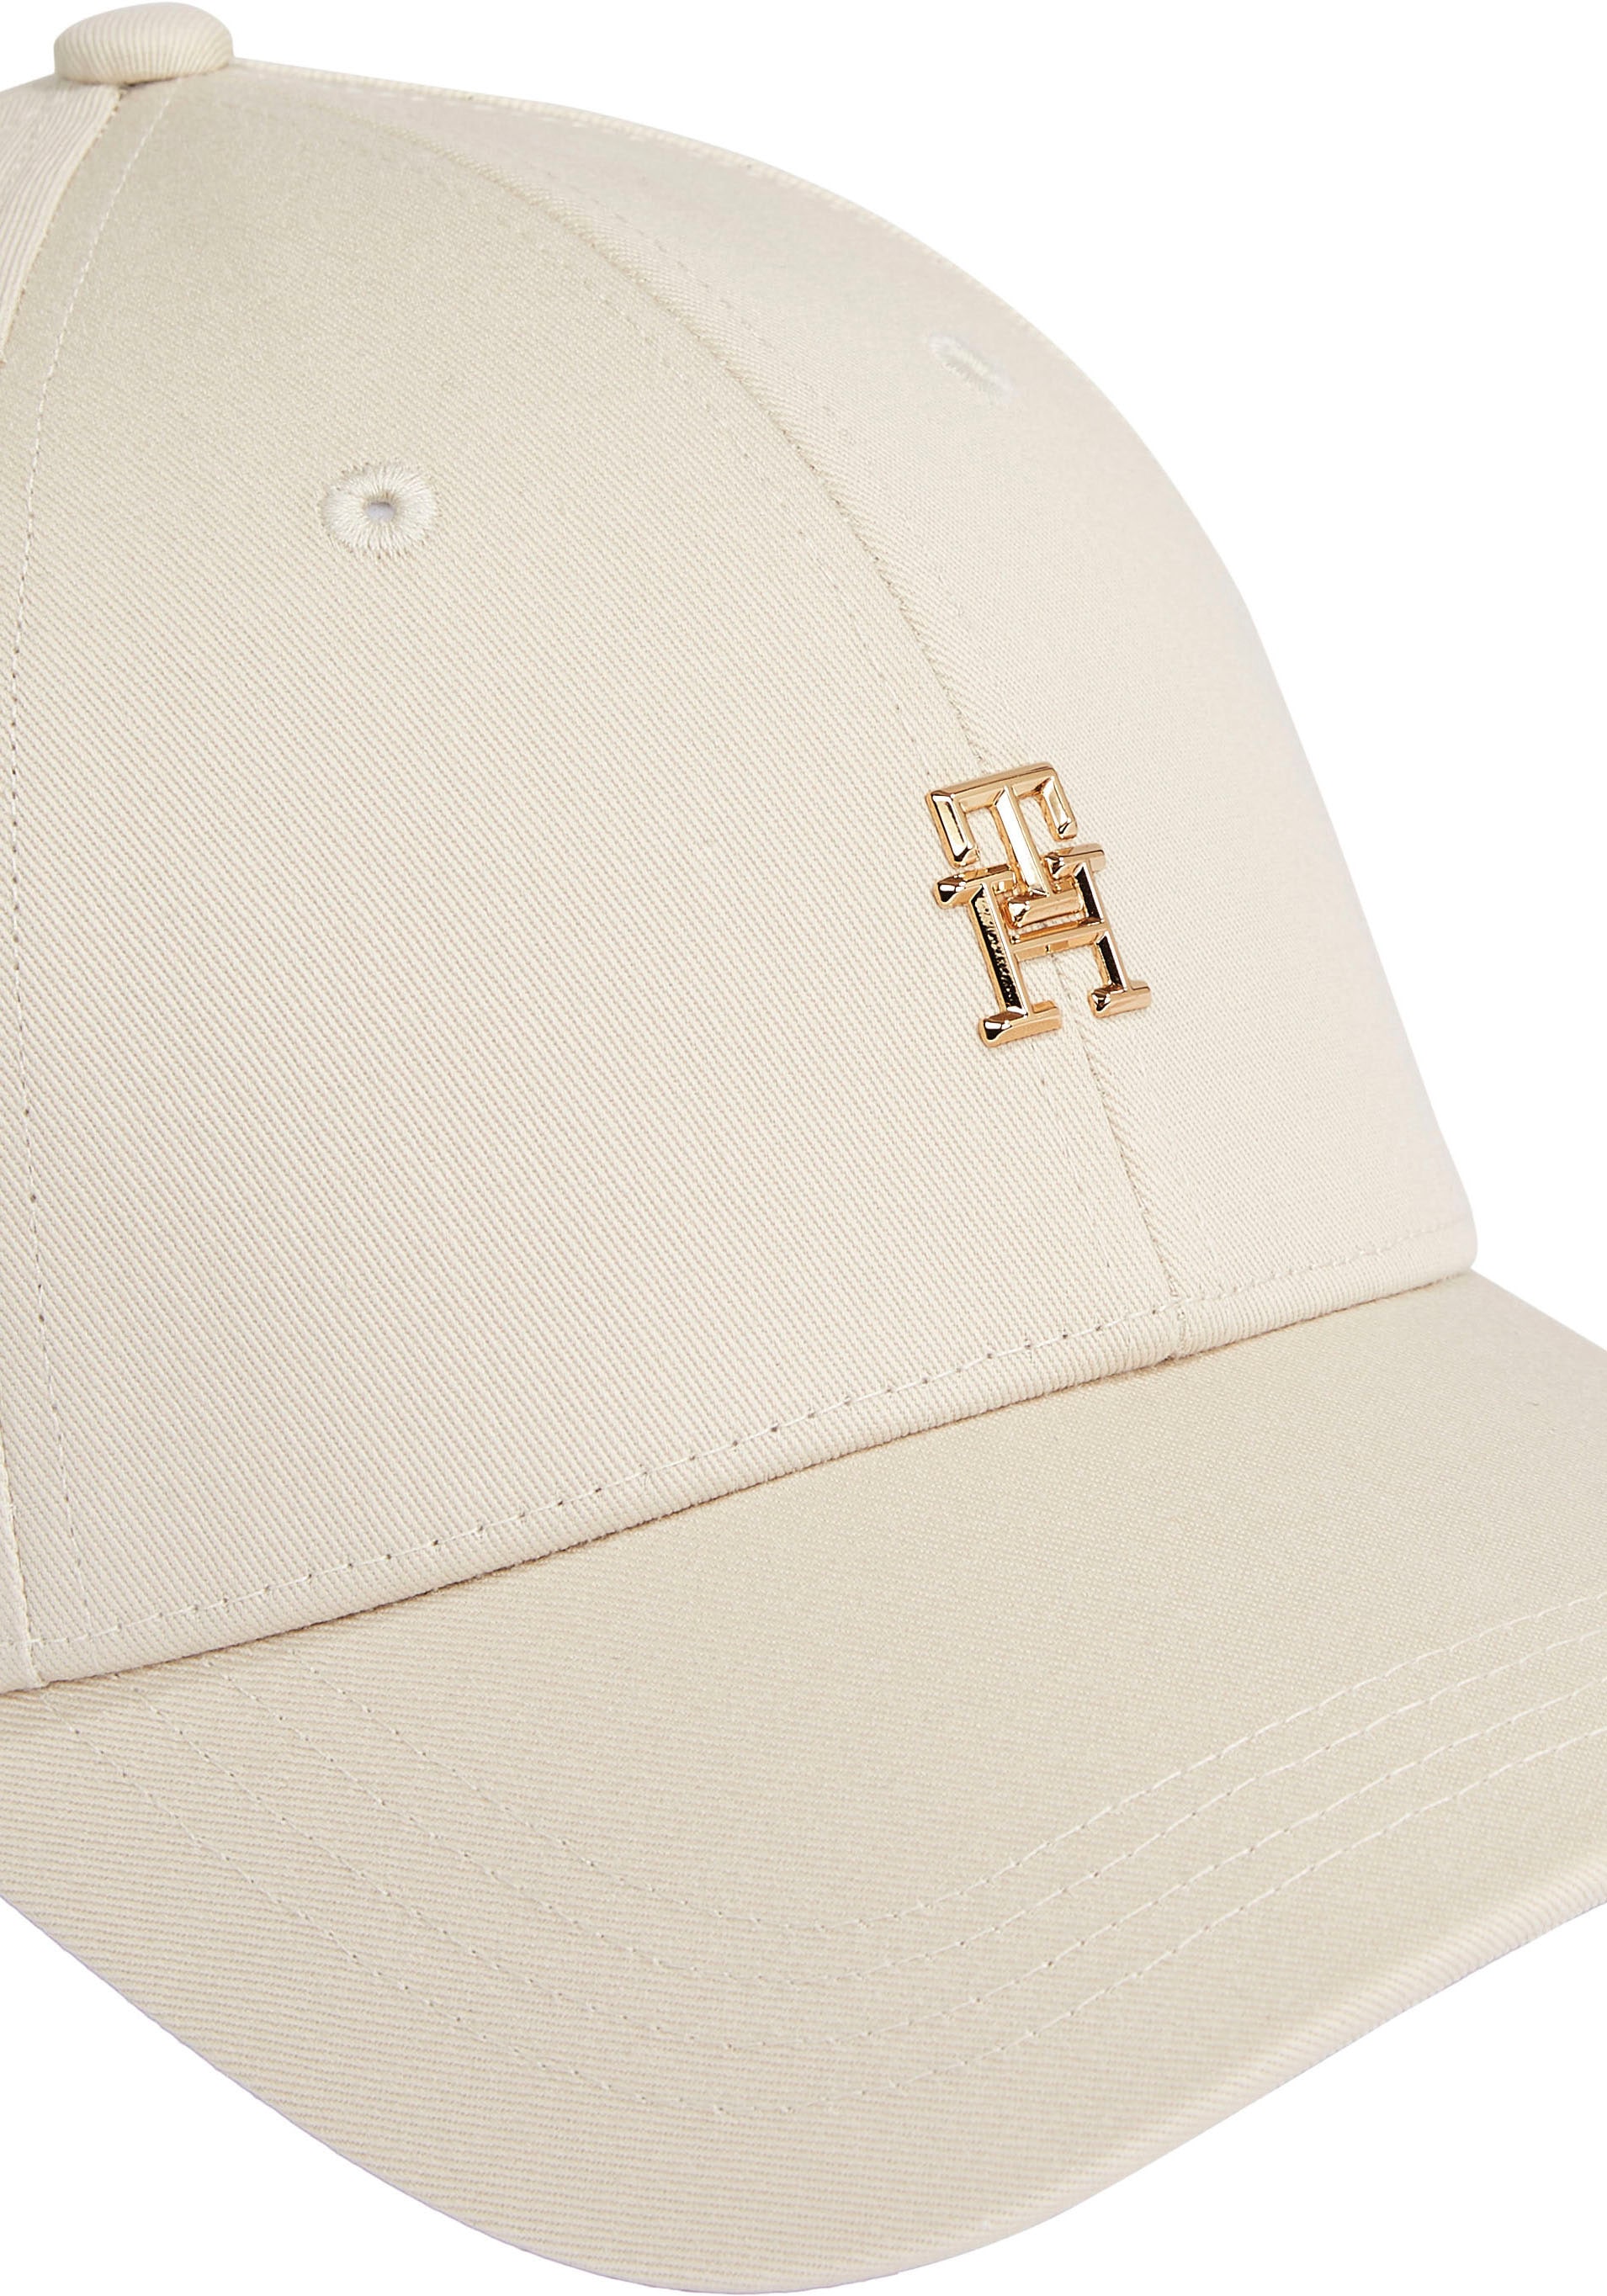 Tommy Hilfiger Baseball Cap »TH DISTINCT CAP«, mit Markenlabel